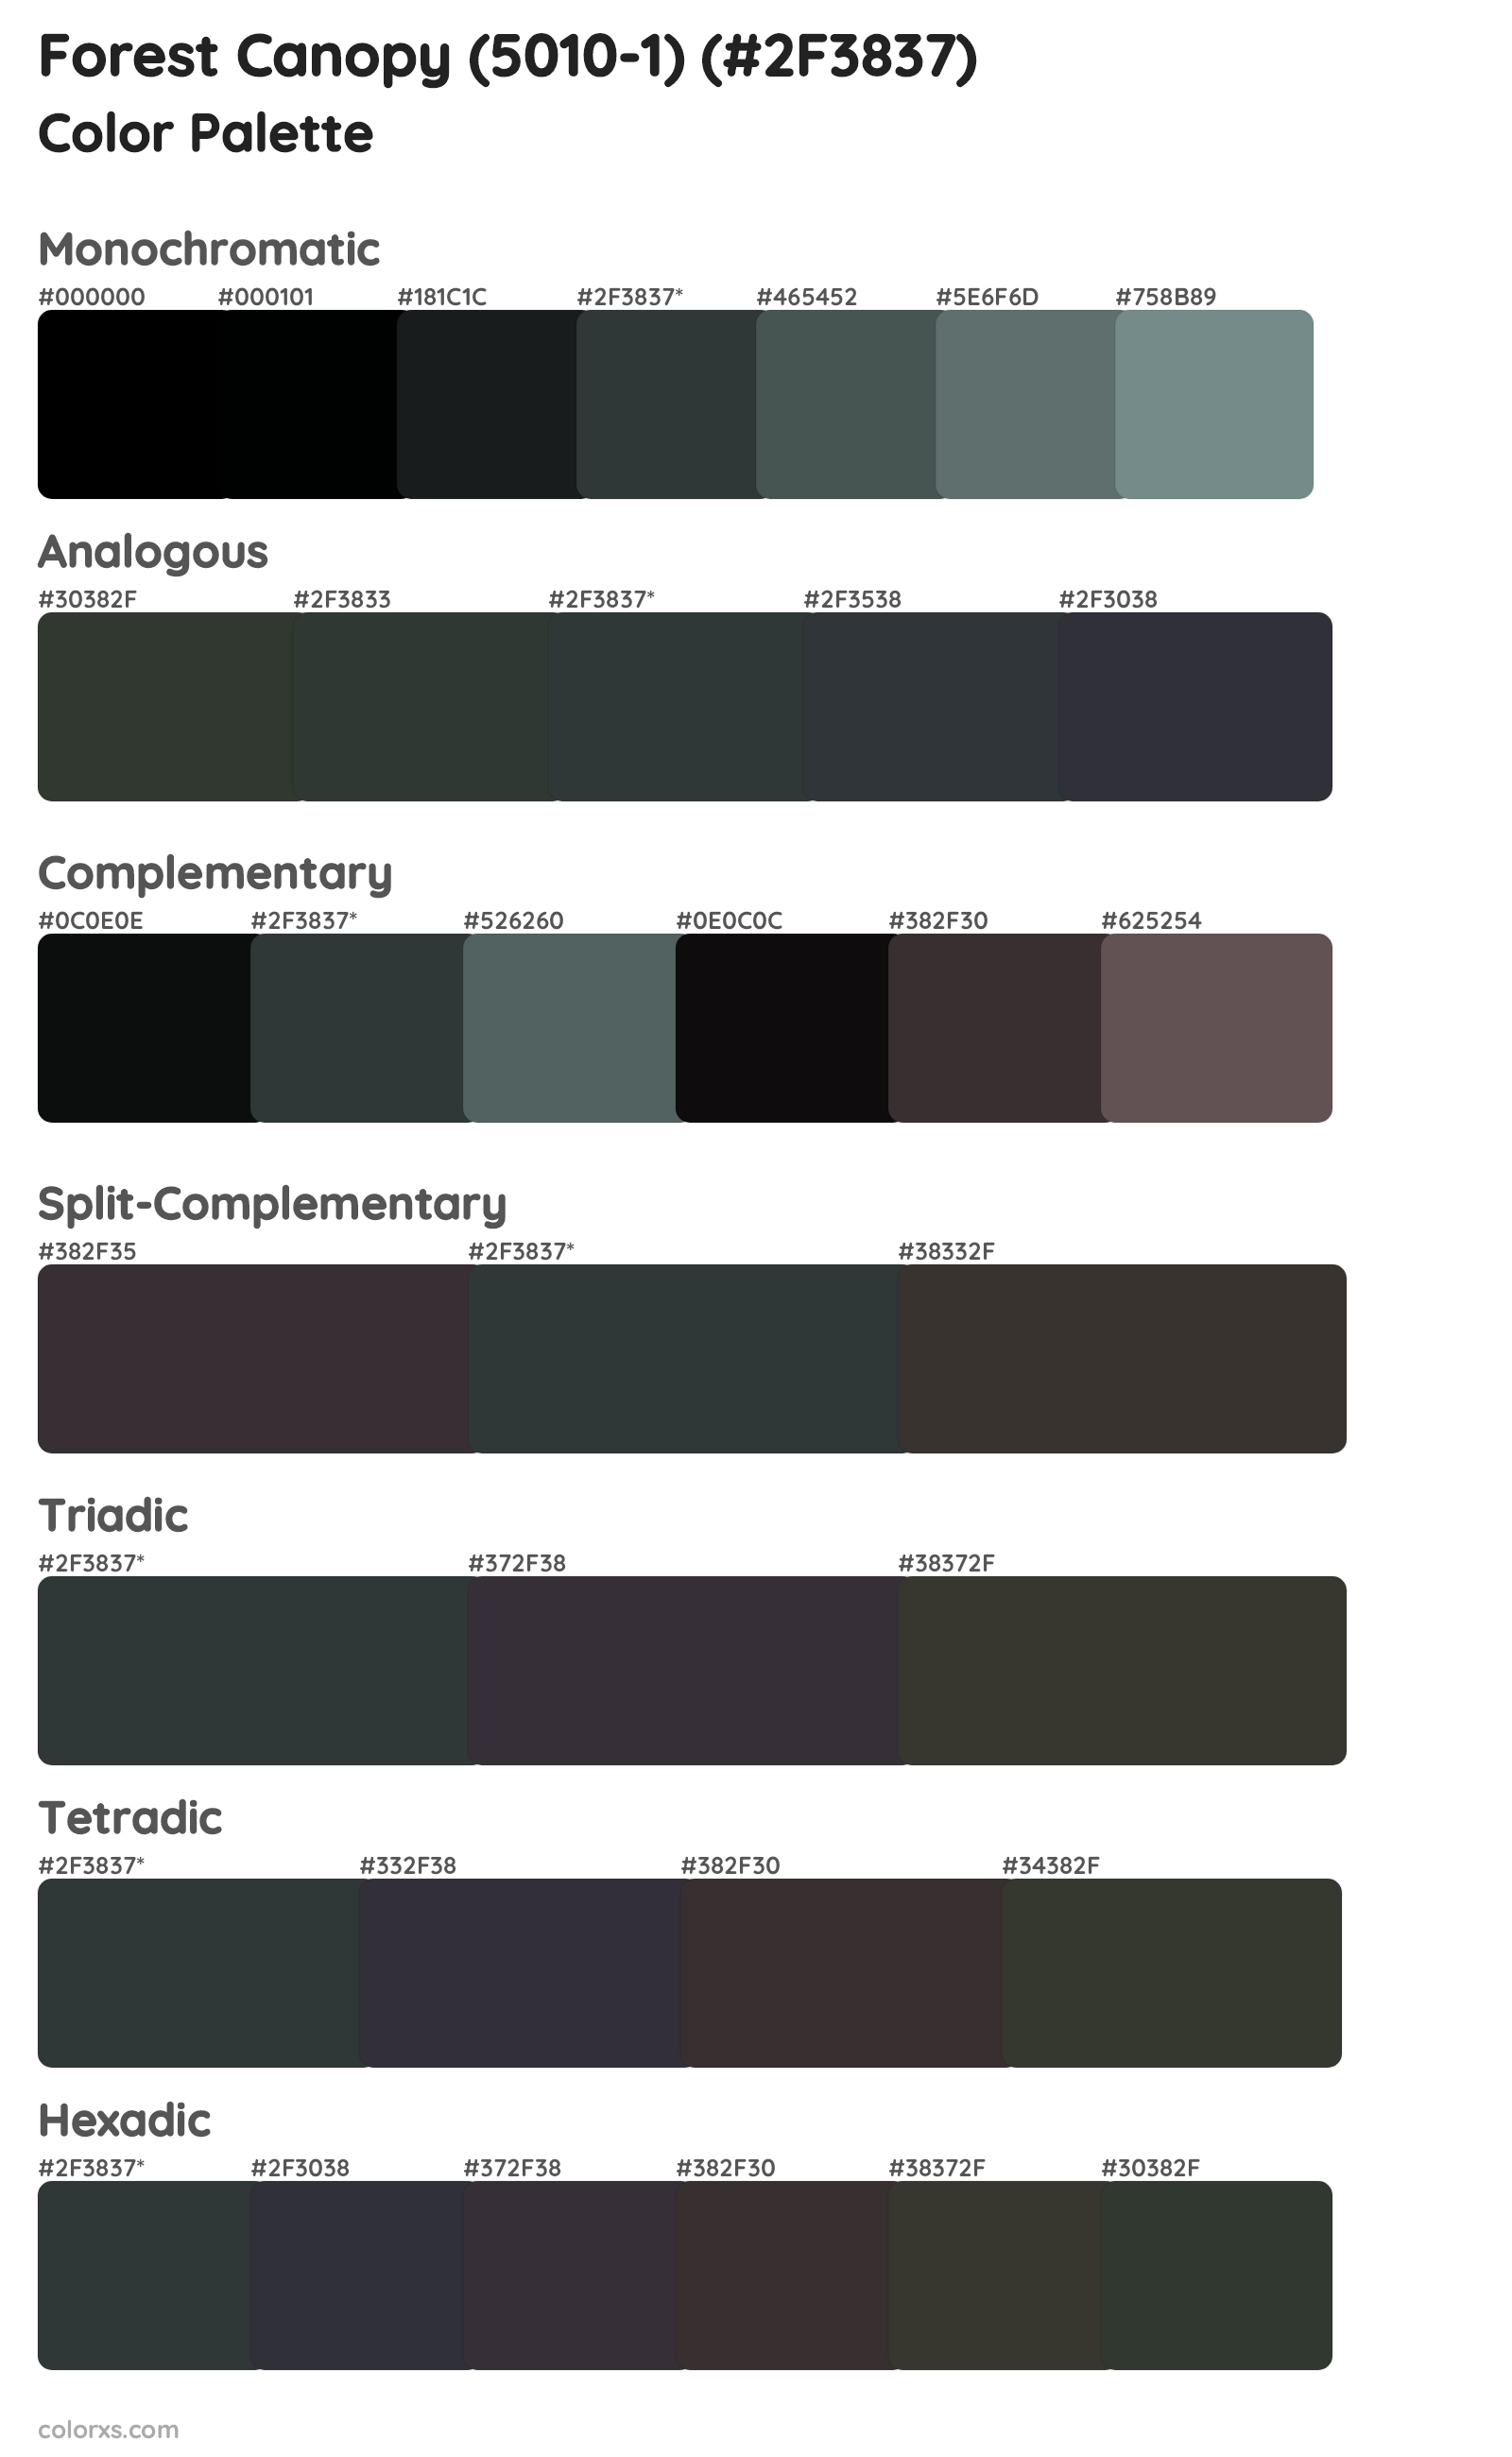 Forest Canopy (5010-1) Color Scheme Palettes